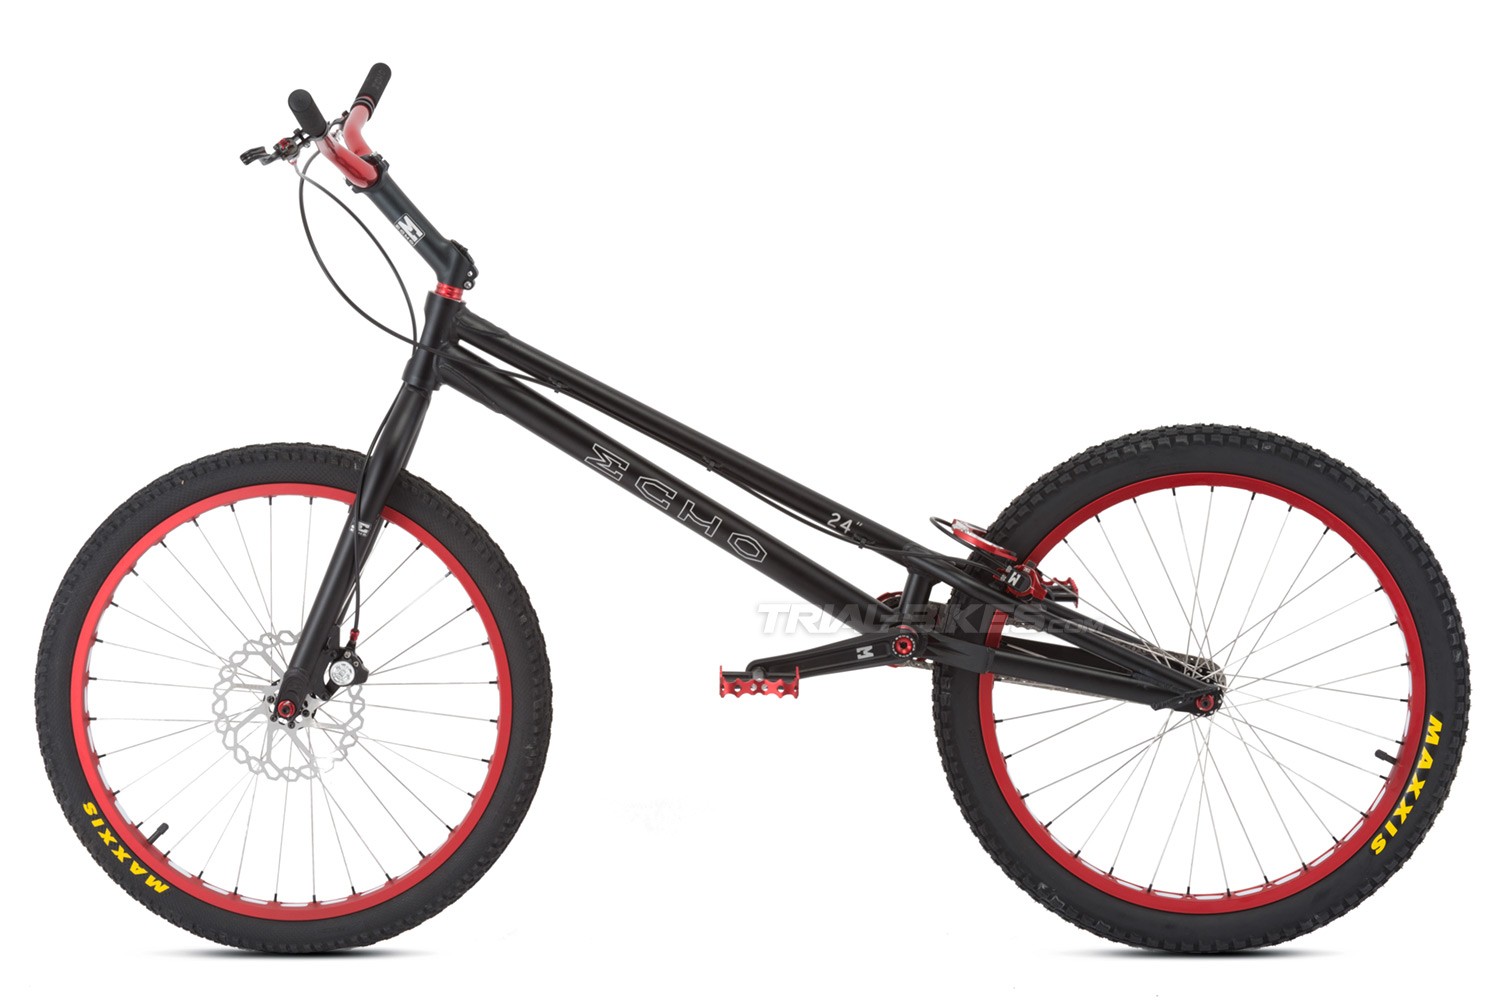 24 inch trials bike